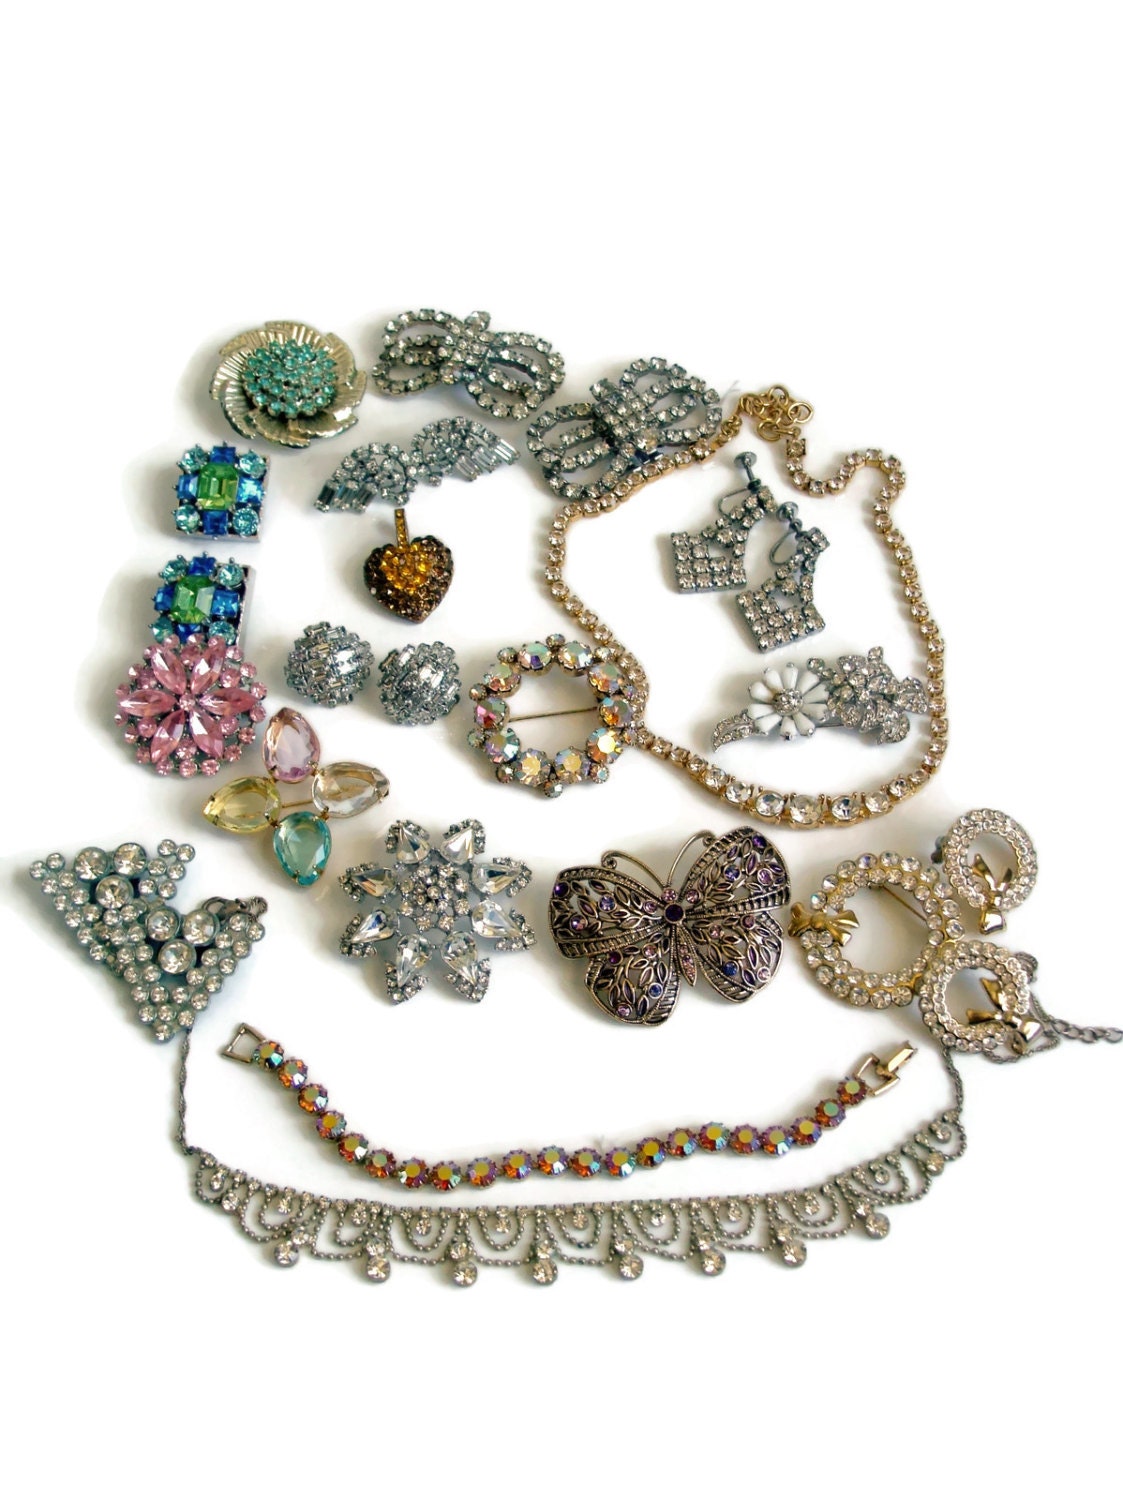 Vintage Jewelry Lots 81